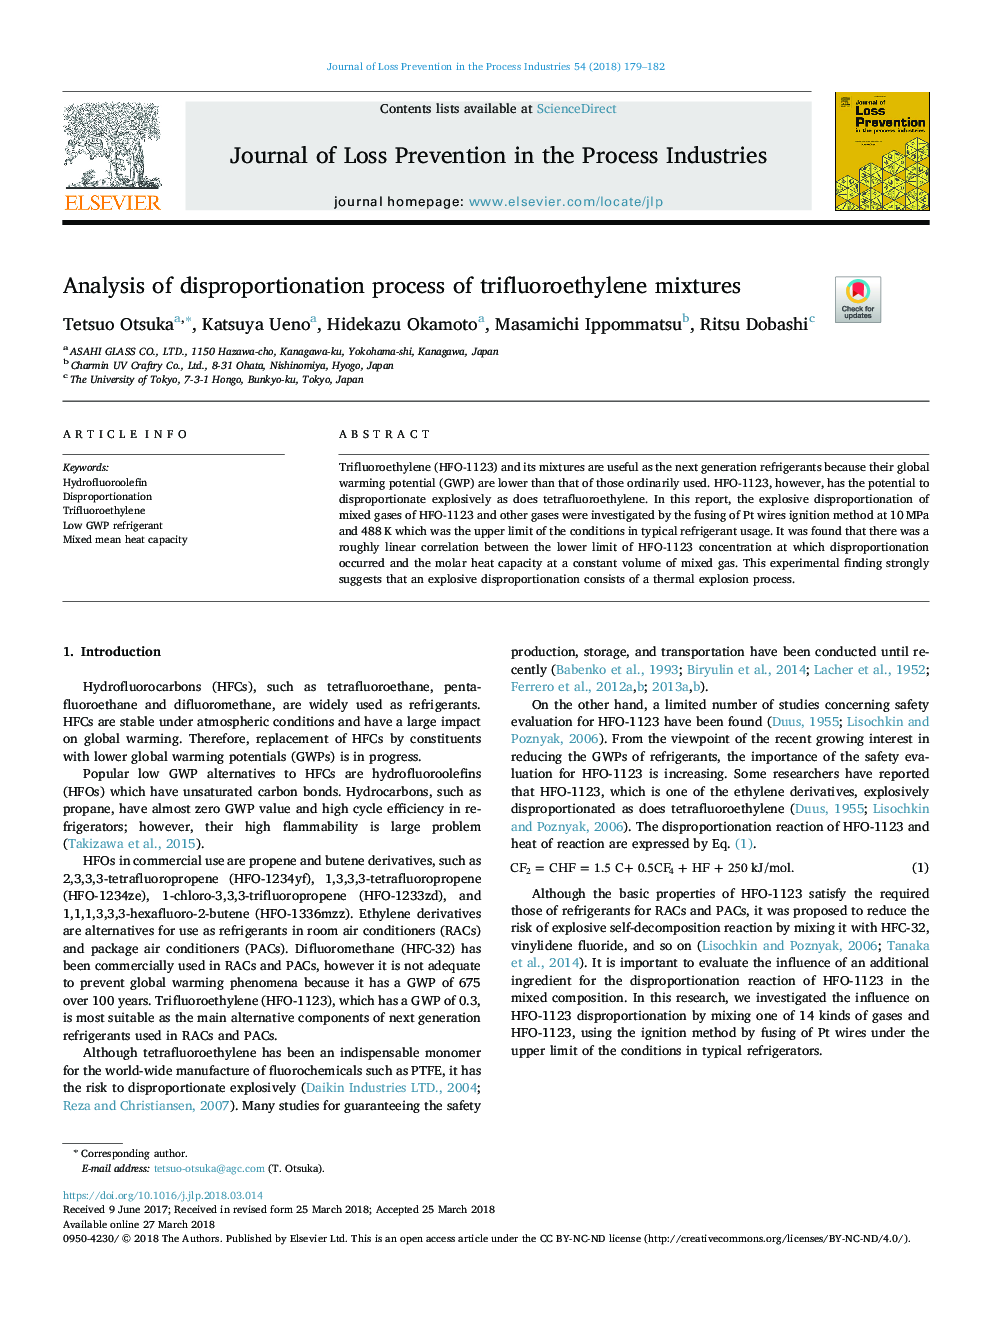 Analysis of disproportionation process of trifluoroethylene mixtures